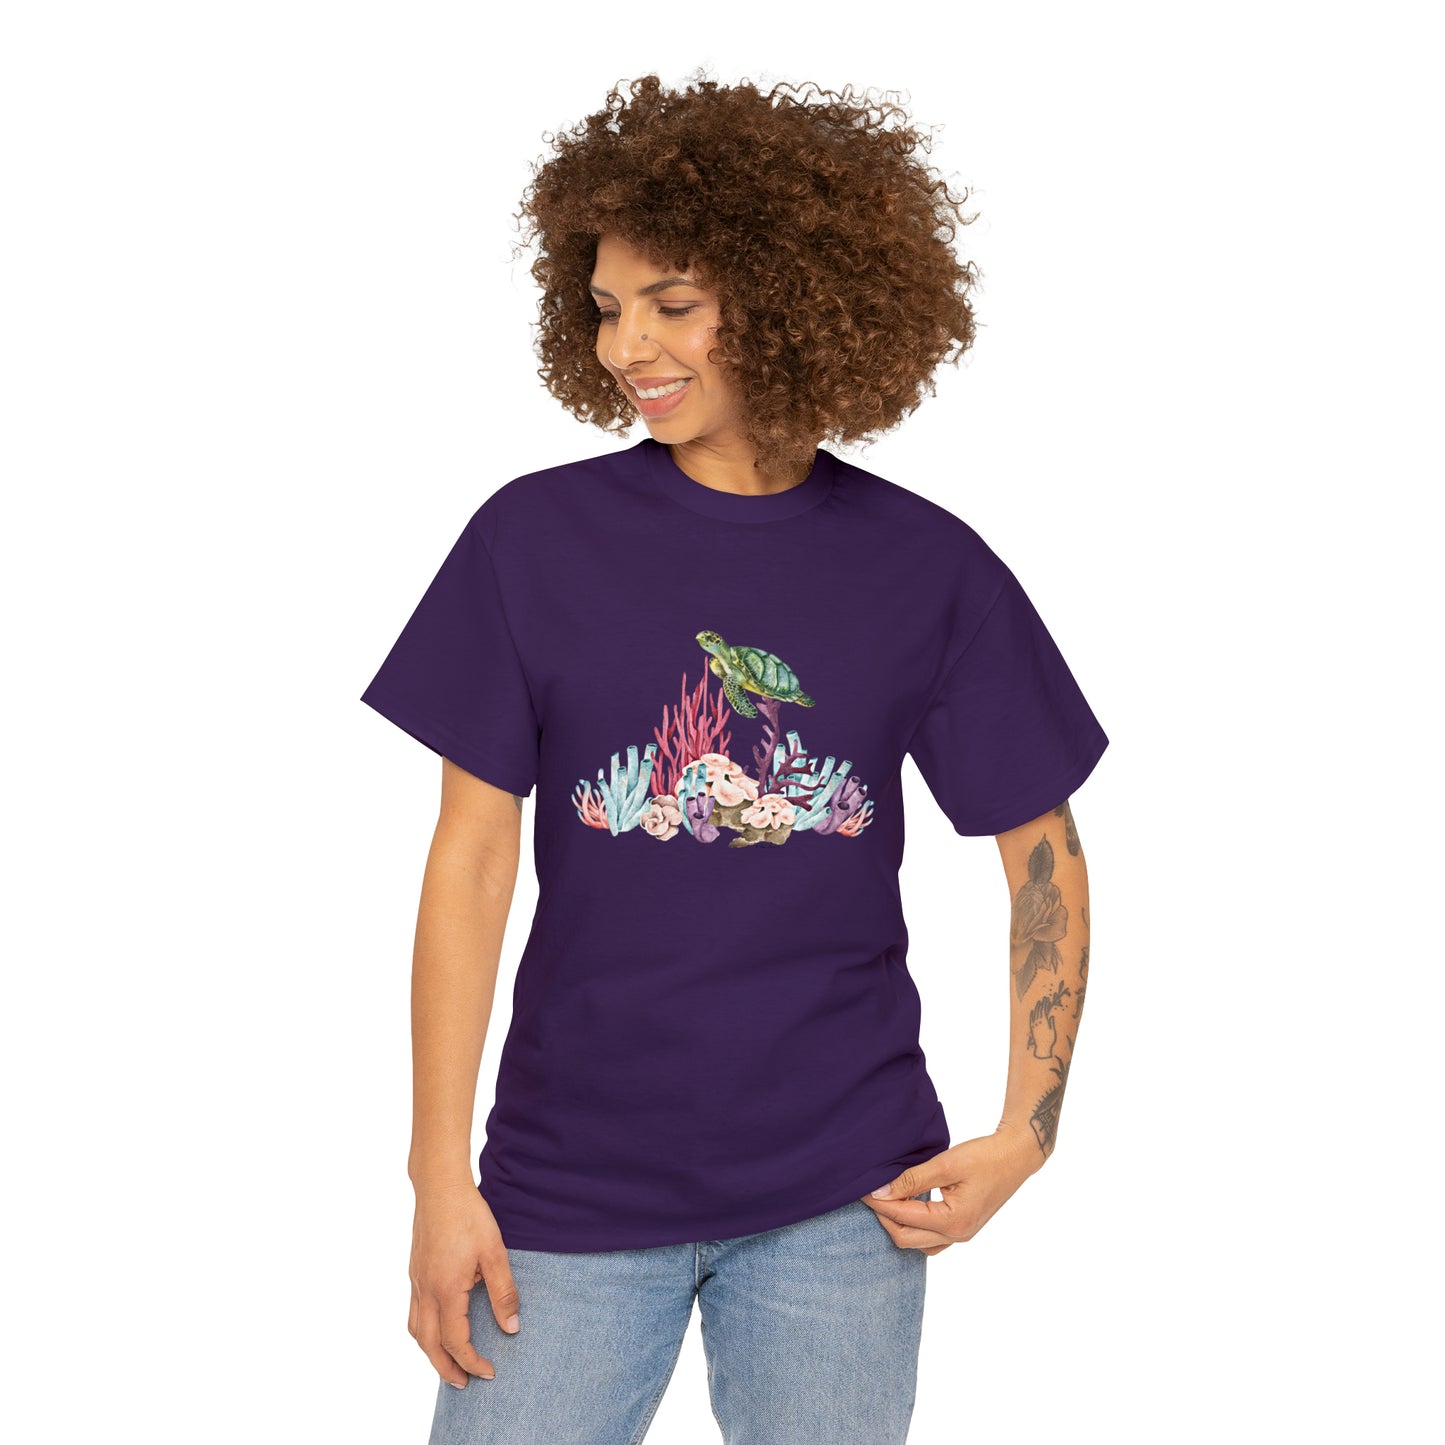 Mock up of a slim woman wearing the Purple shirt